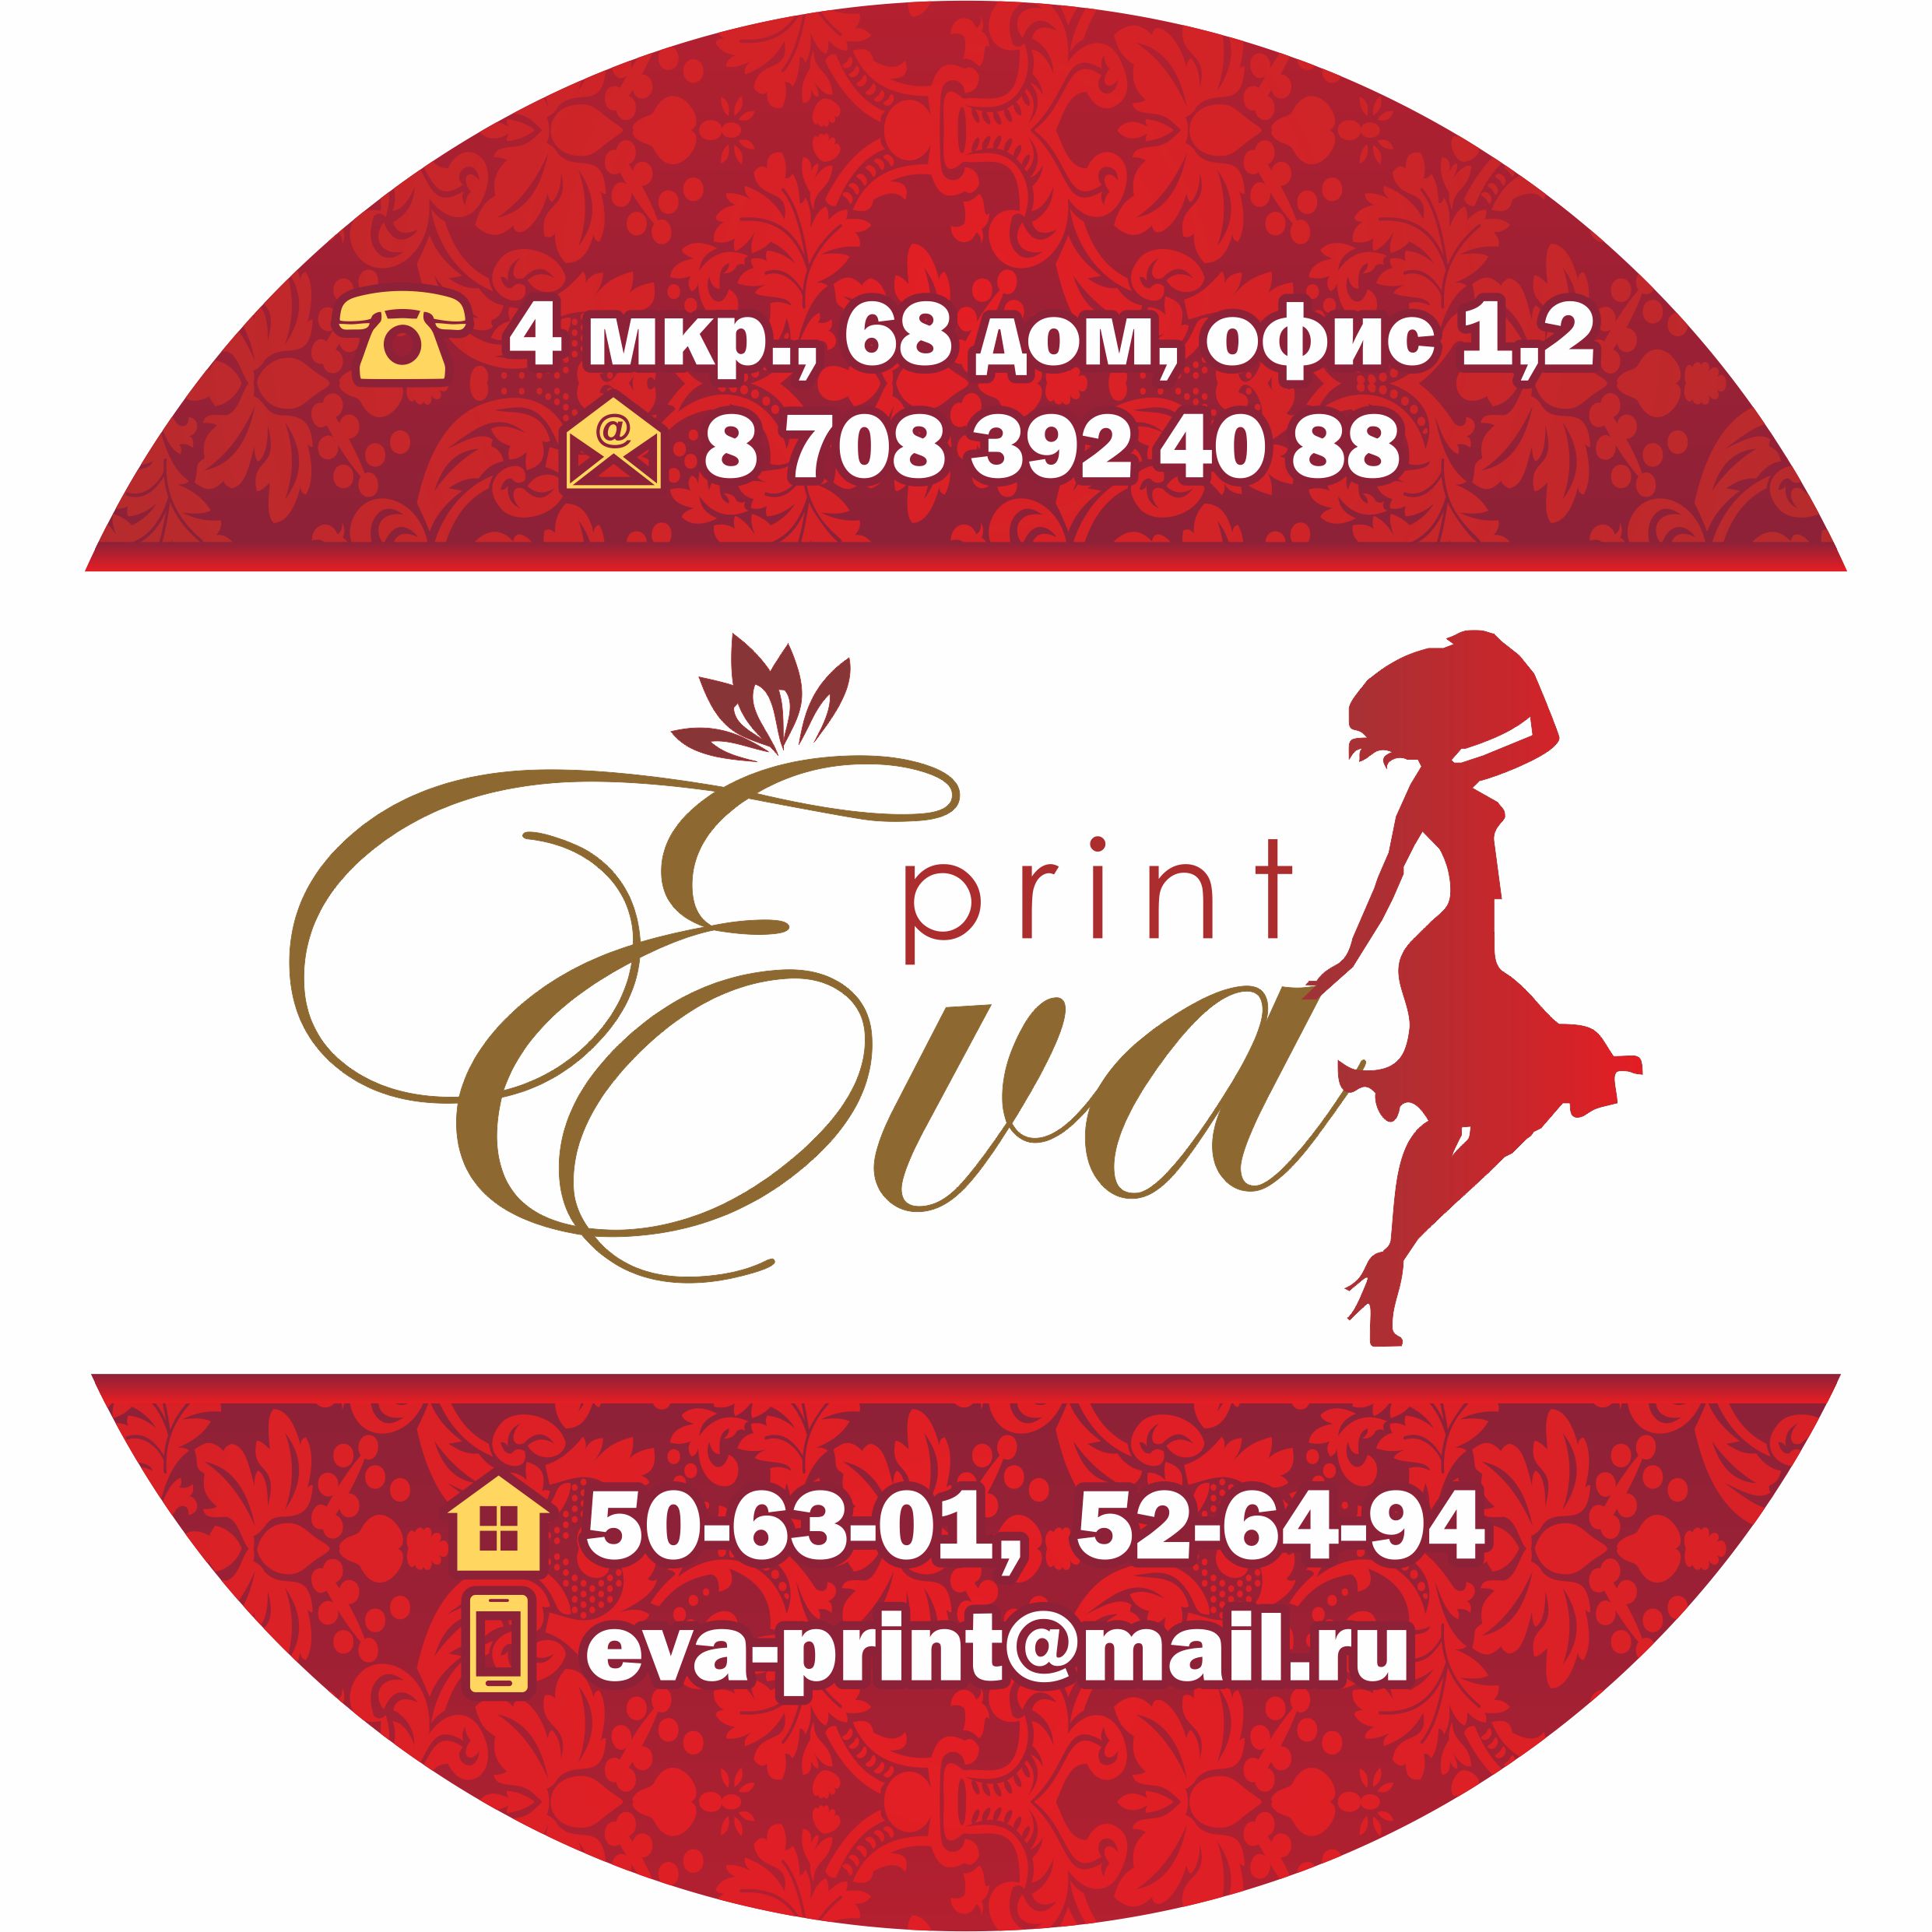 Eva-print